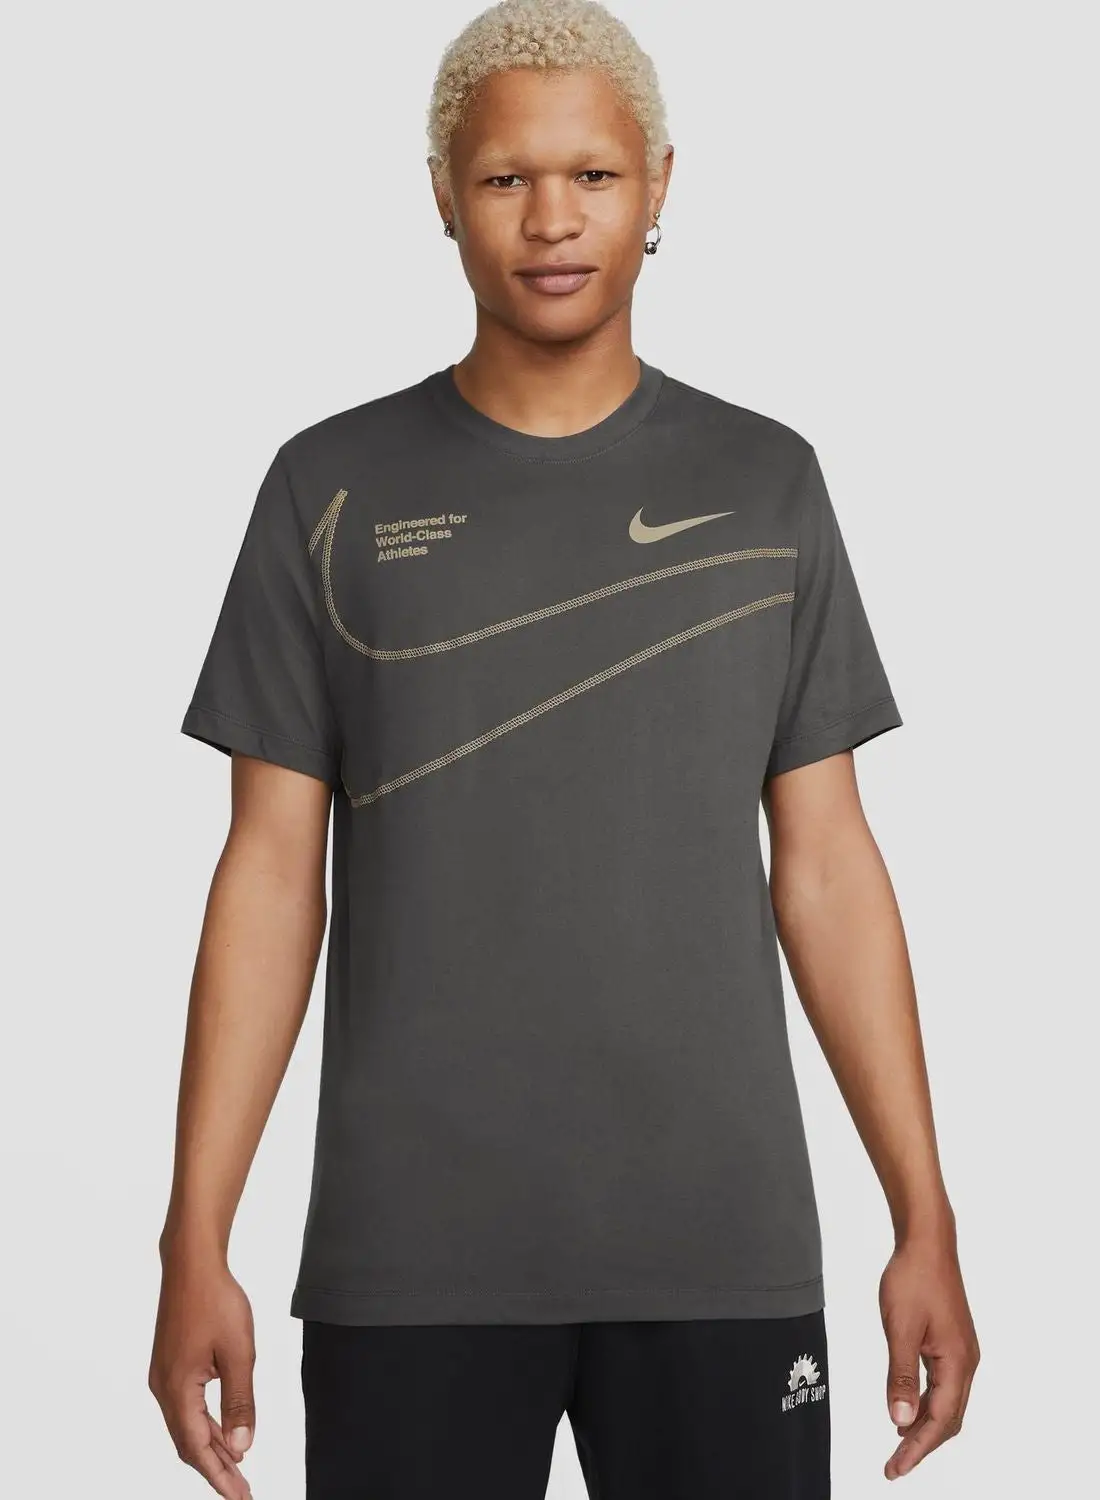 Nike Dr-Fit Qs T-Shirt